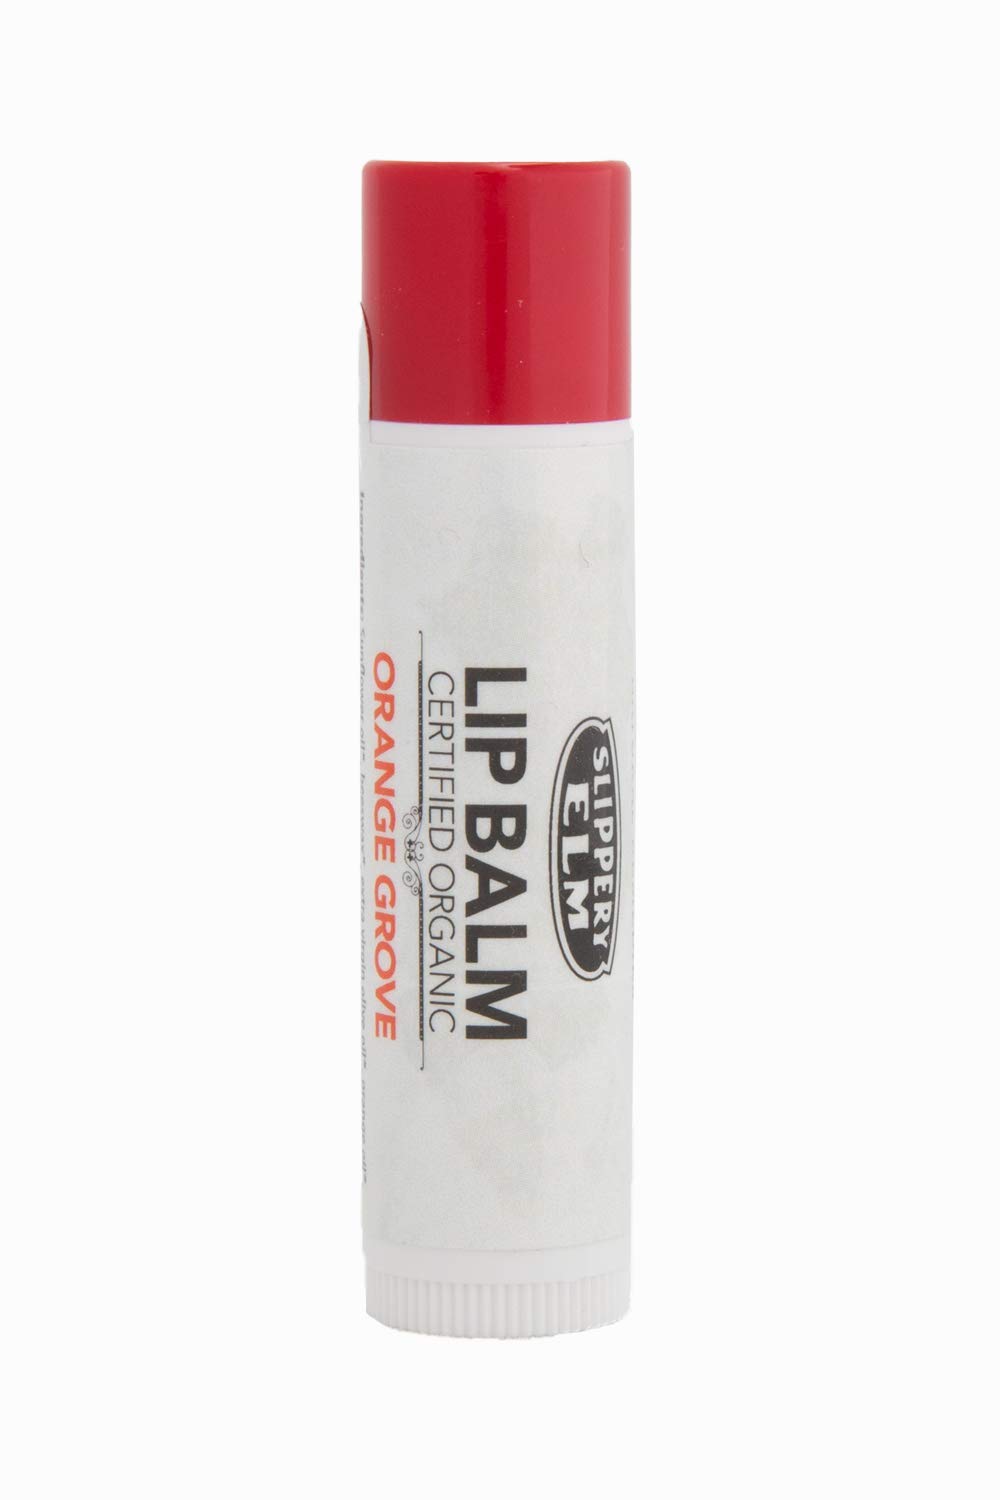 0.15-Oz Thayers Organic Slippery Elm Lip Balm (Orange Grove) $2.45 + Free S&H w/ Prime or $25+